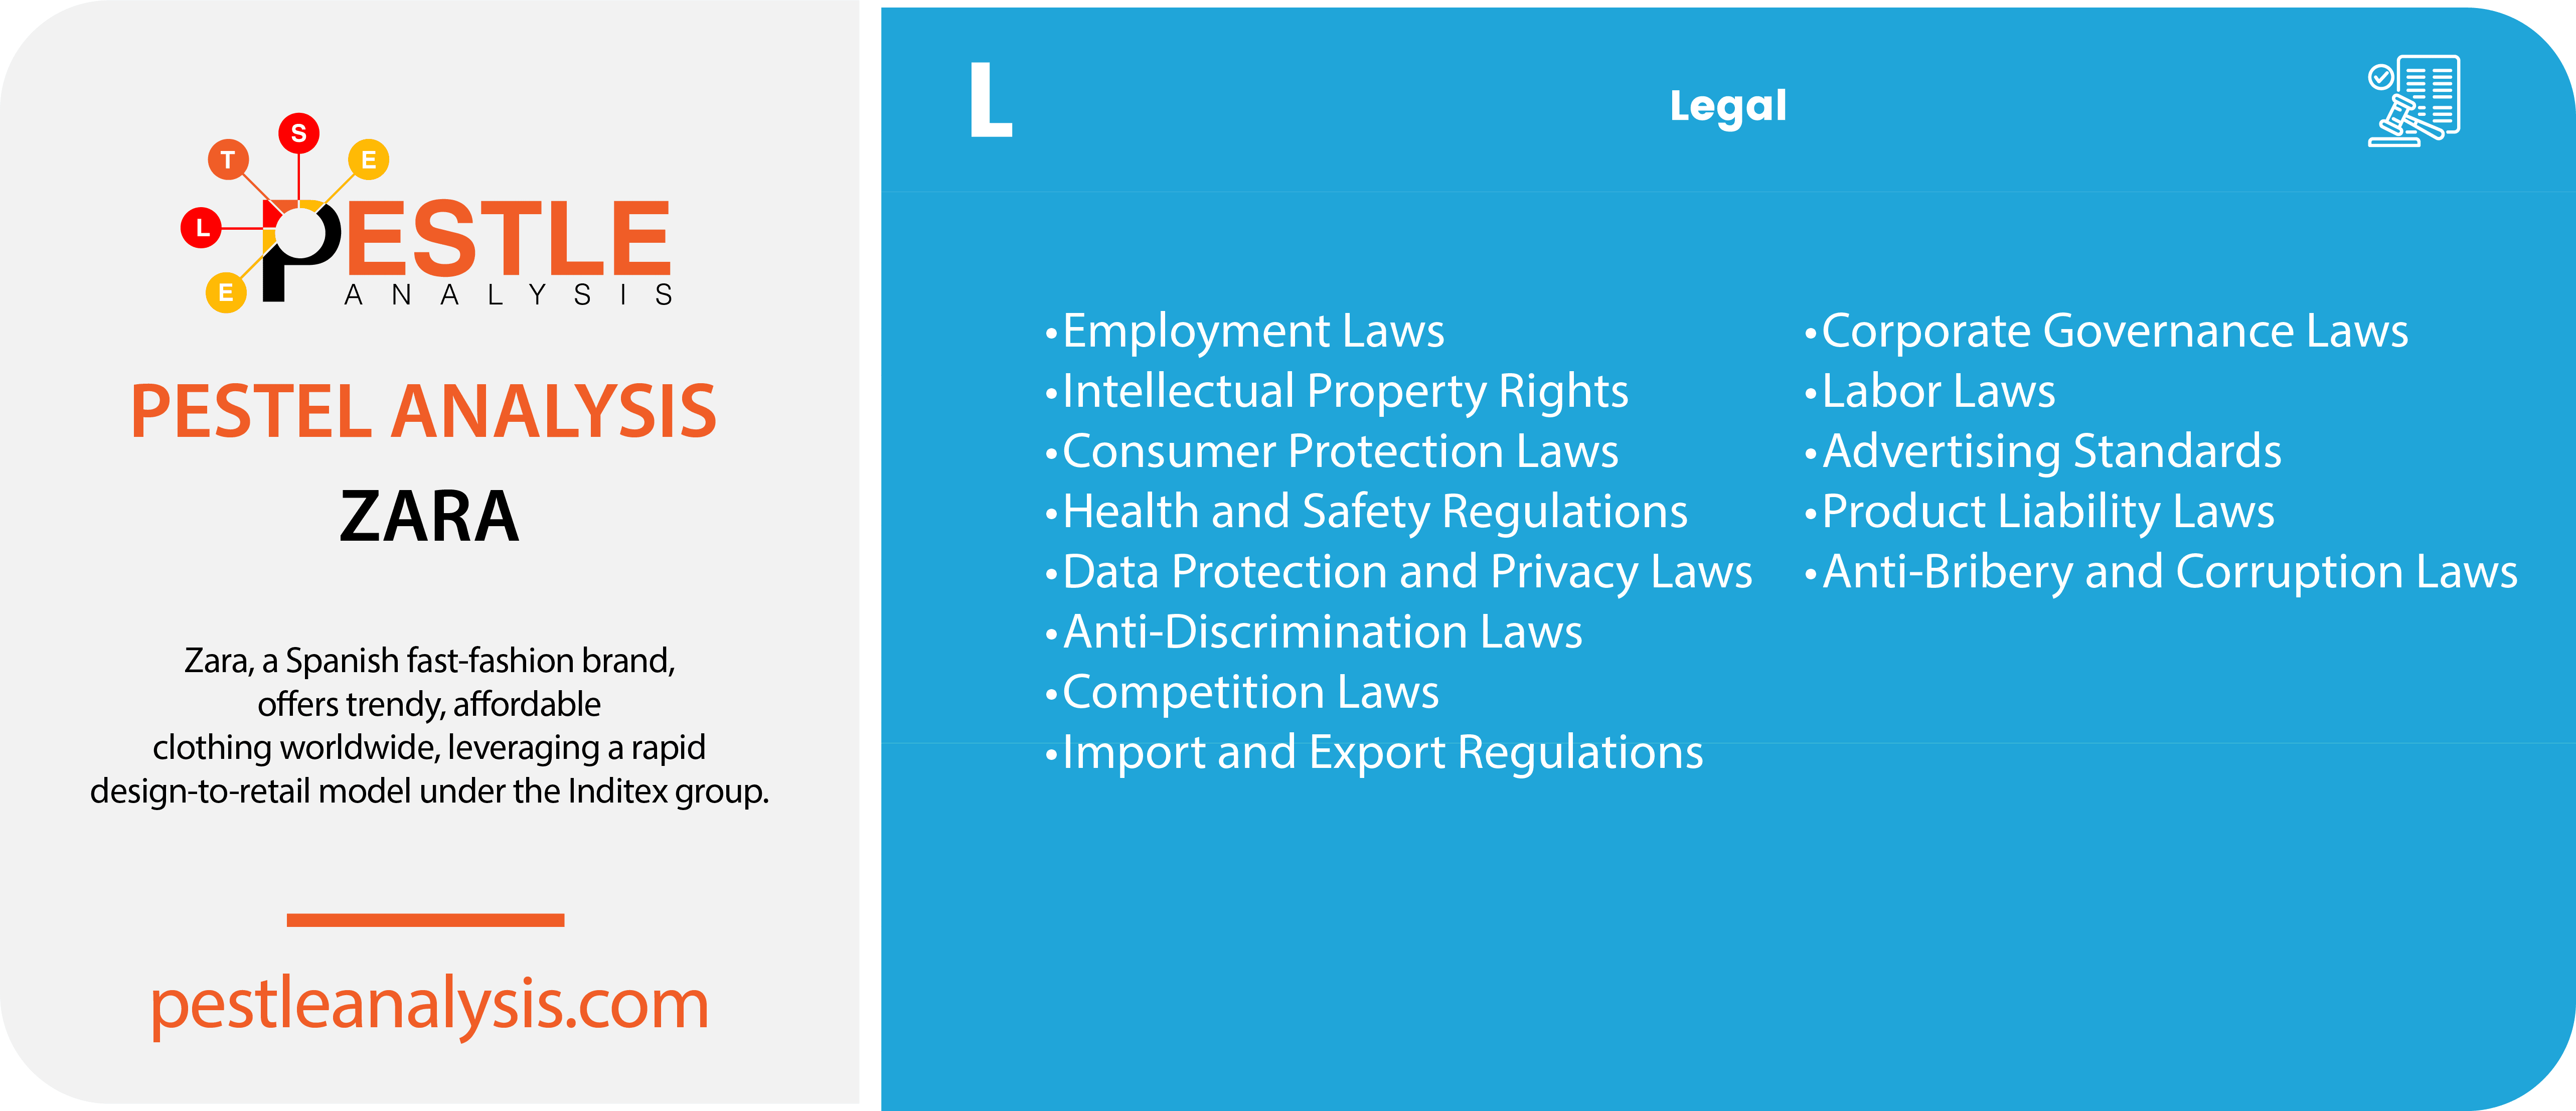 zara-pestle-analysis-legal-factors-template